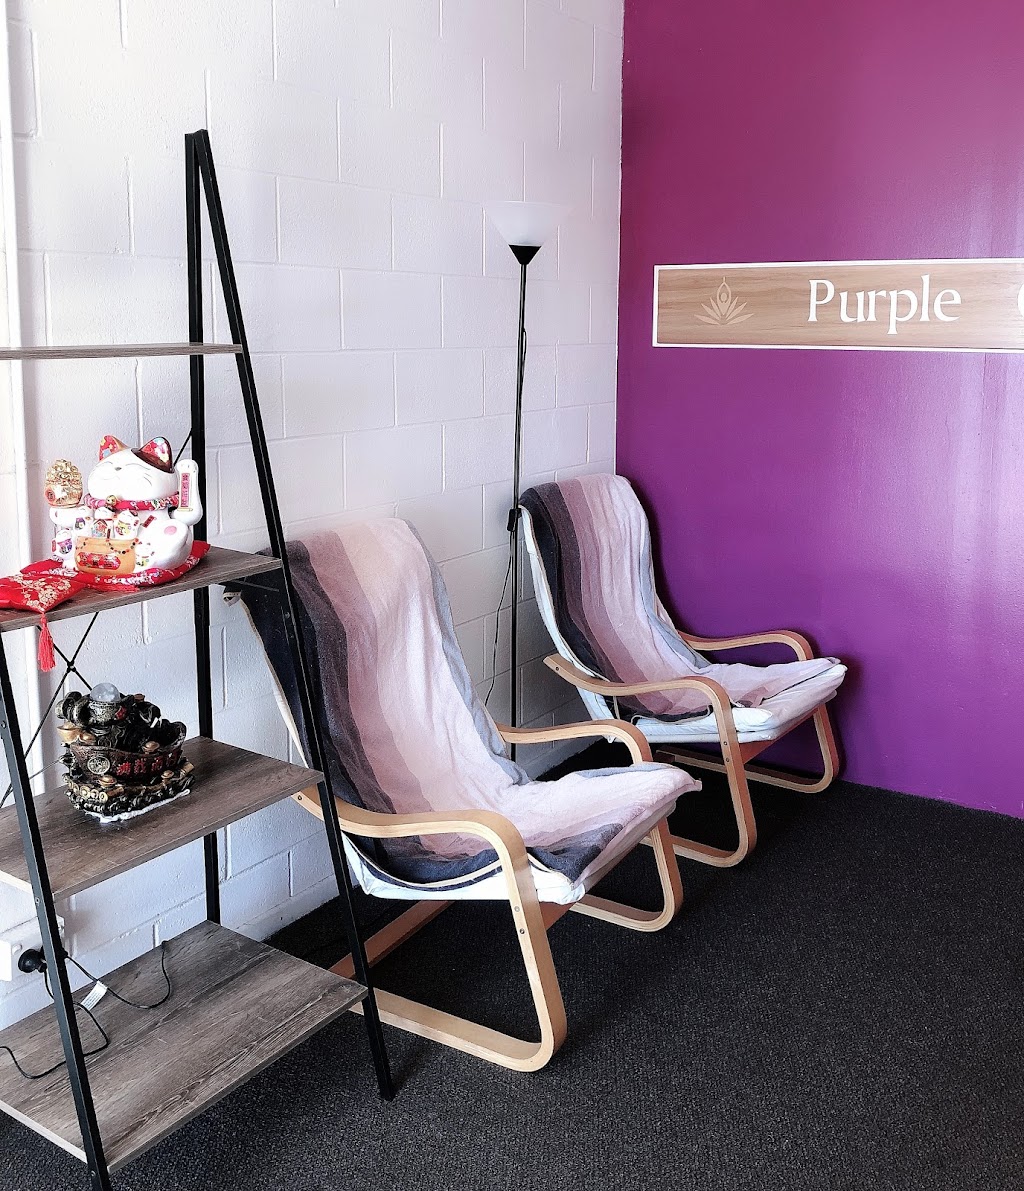 Purple Day Spa Massage | 4/139 Browns Plains Rd, Browns Plains QLD 4118, Australia | Phone: 0426 951 164